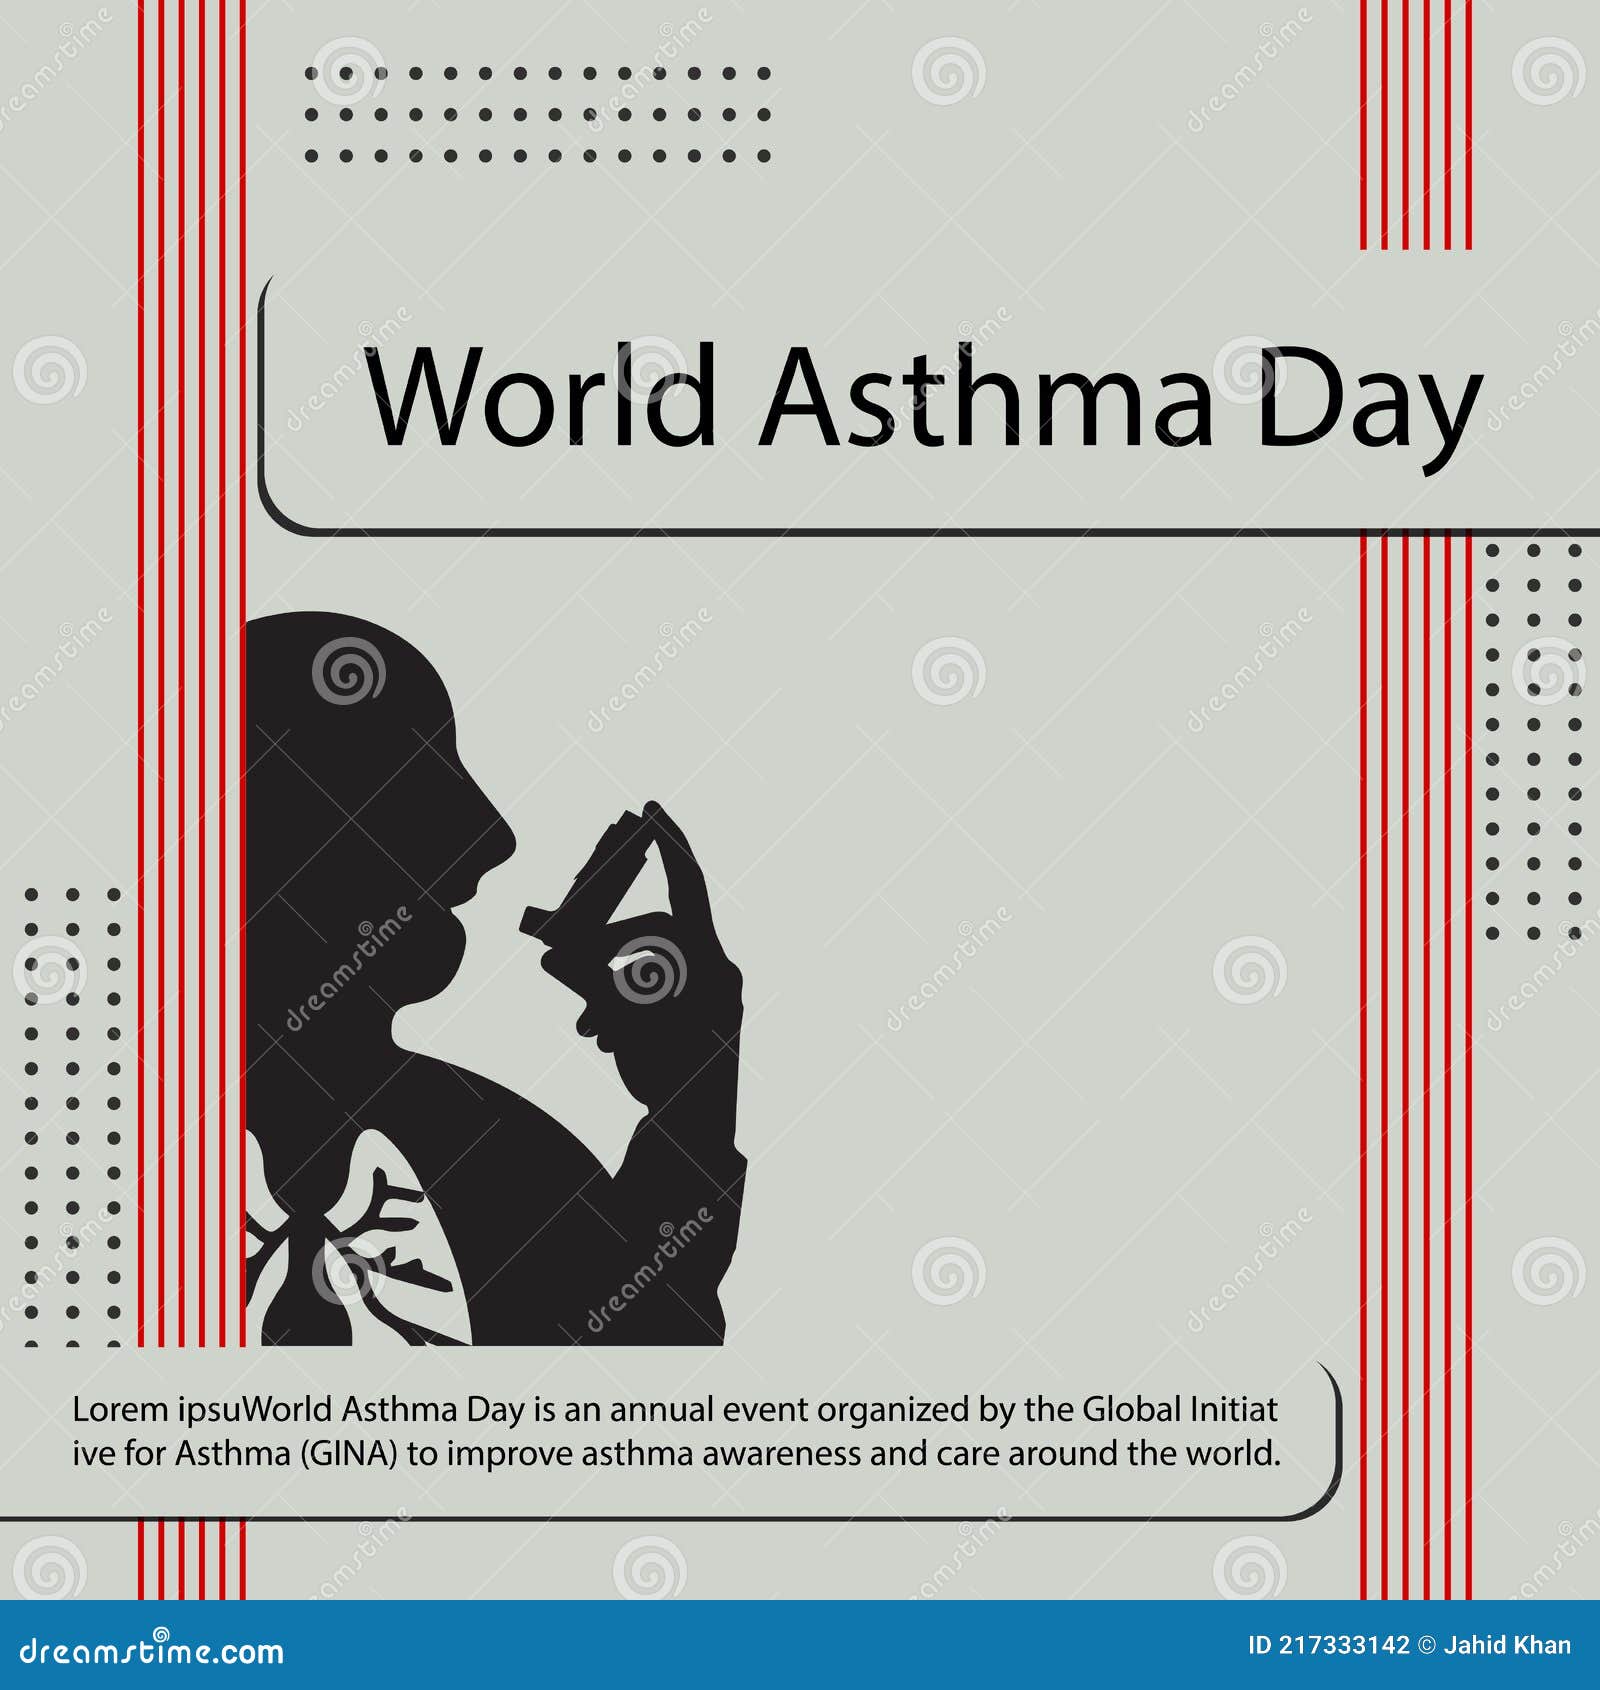 world asthma day.